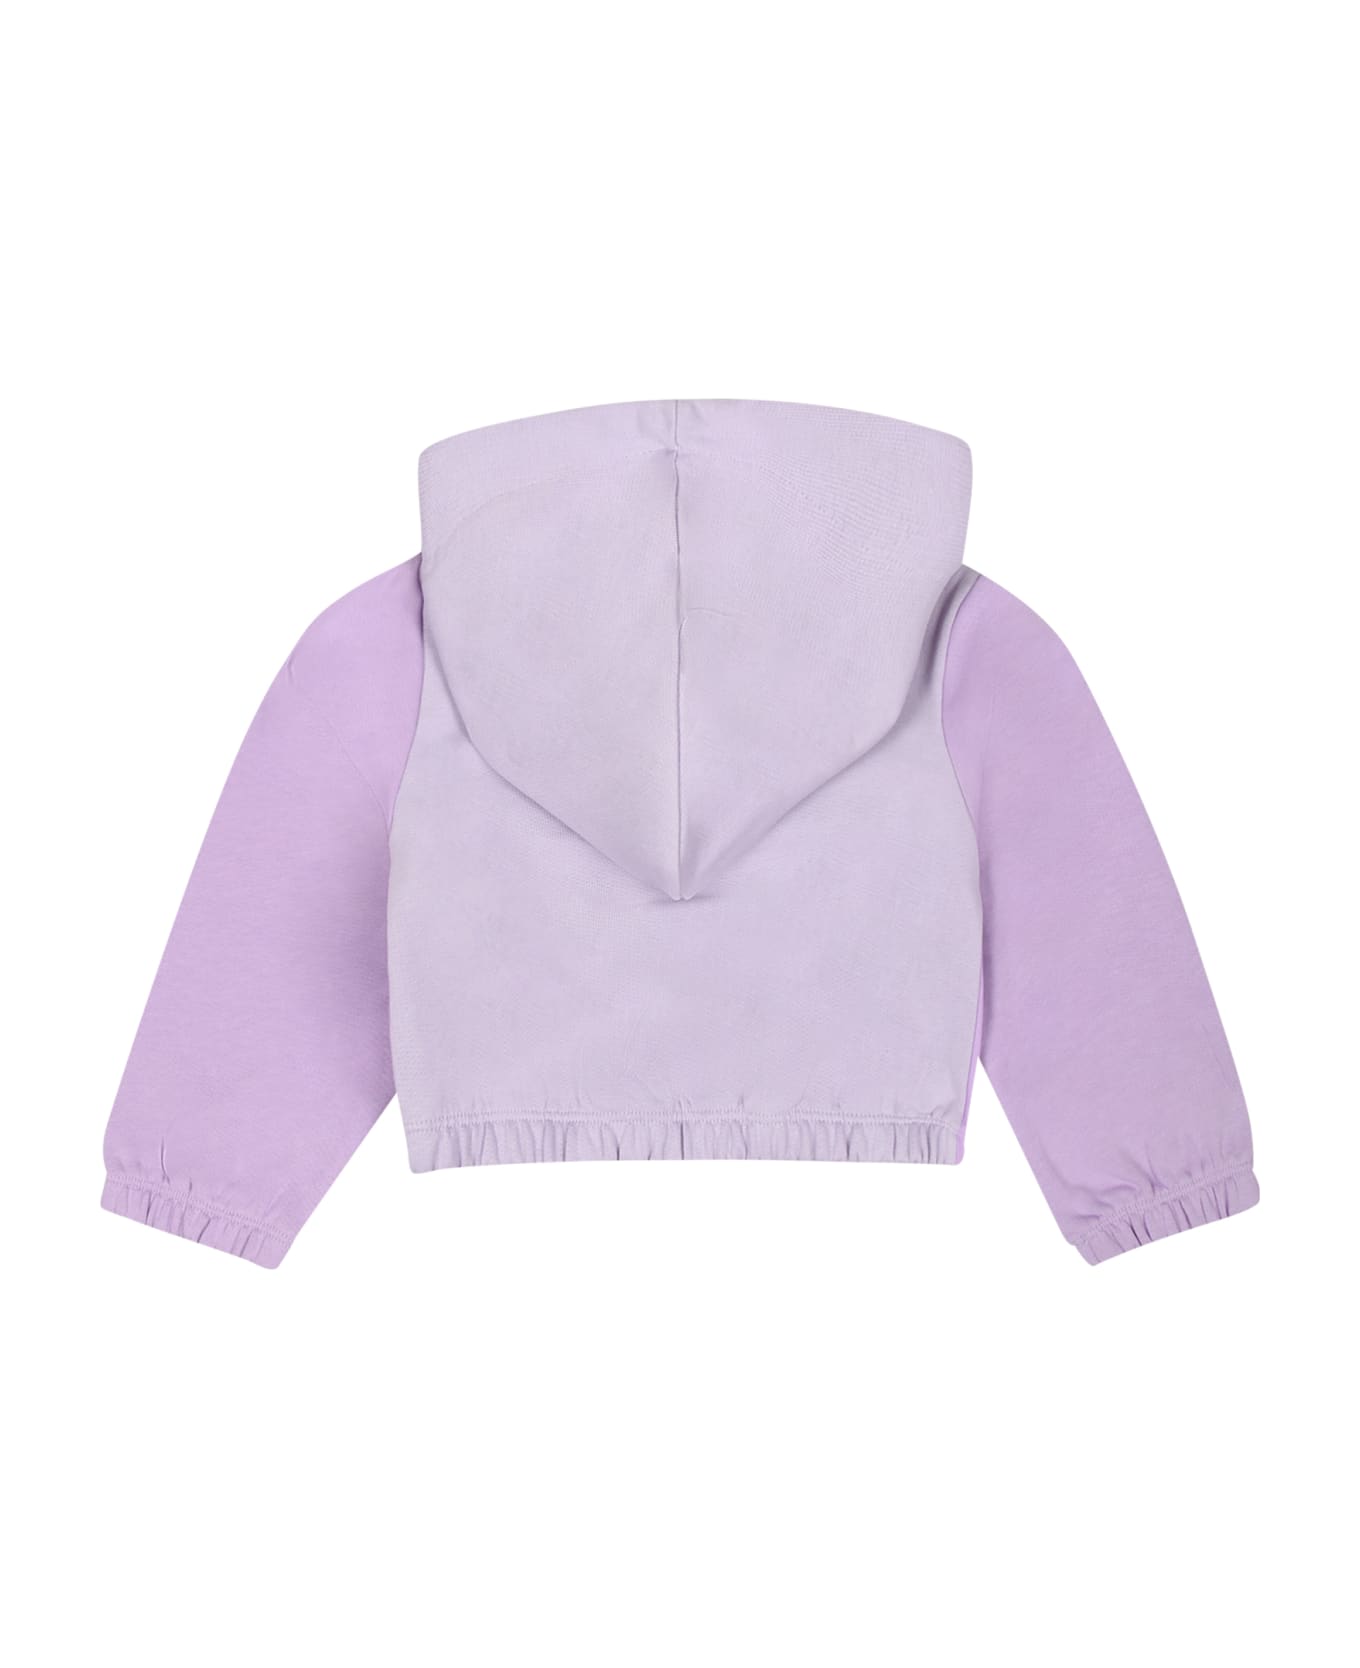 Stella McCartney Kids Purple Sweatshirt For Baby Girl With Seahorse - Violet コート＆ジャケット